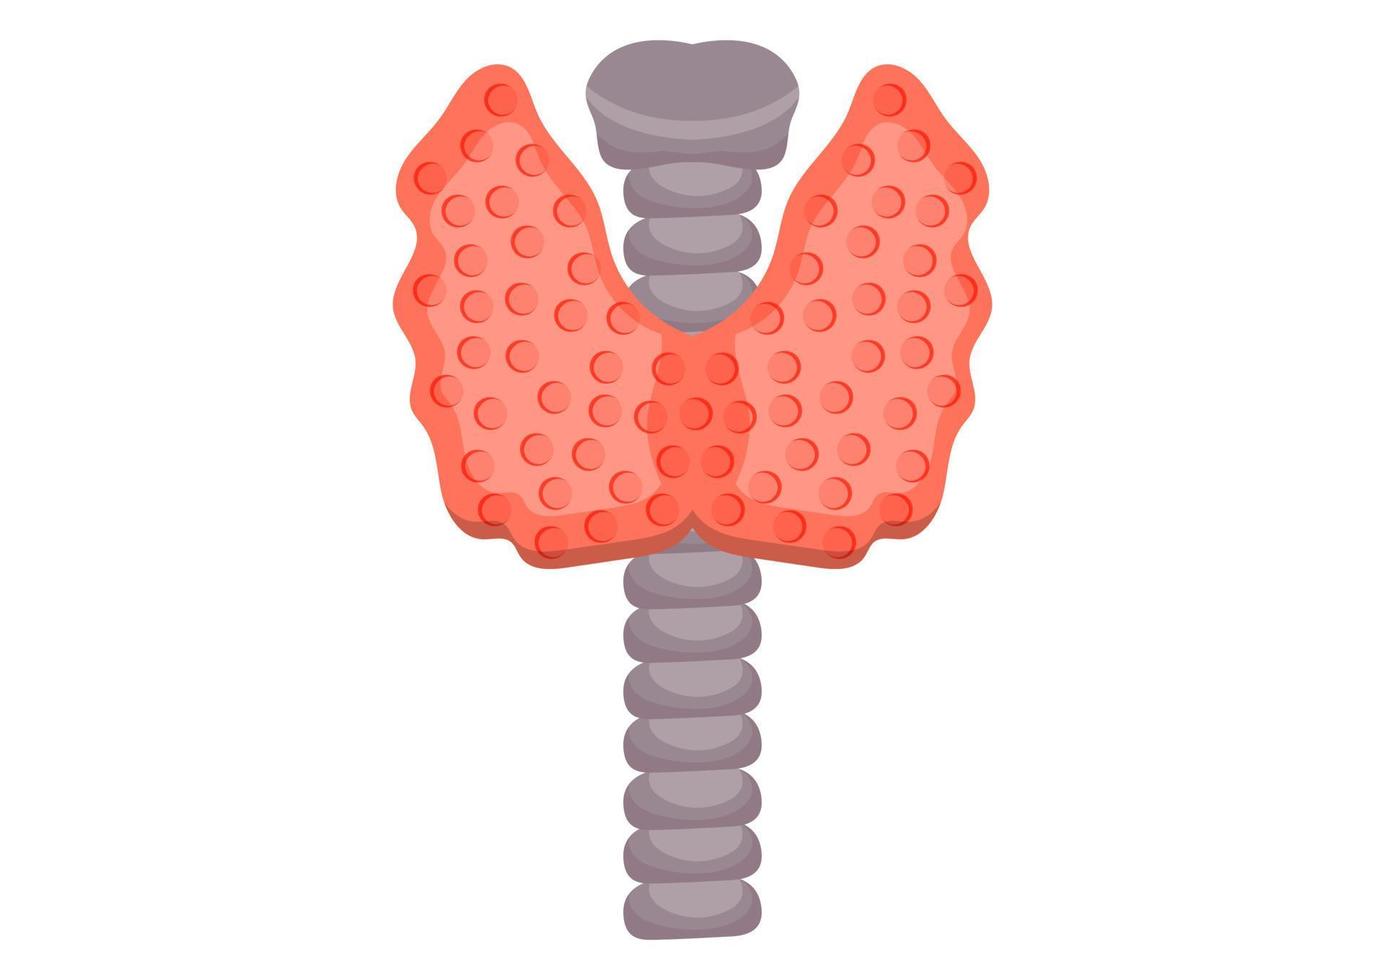 Thyroid gland vector illustration isolated on white background. Human thyroid gland on flat style